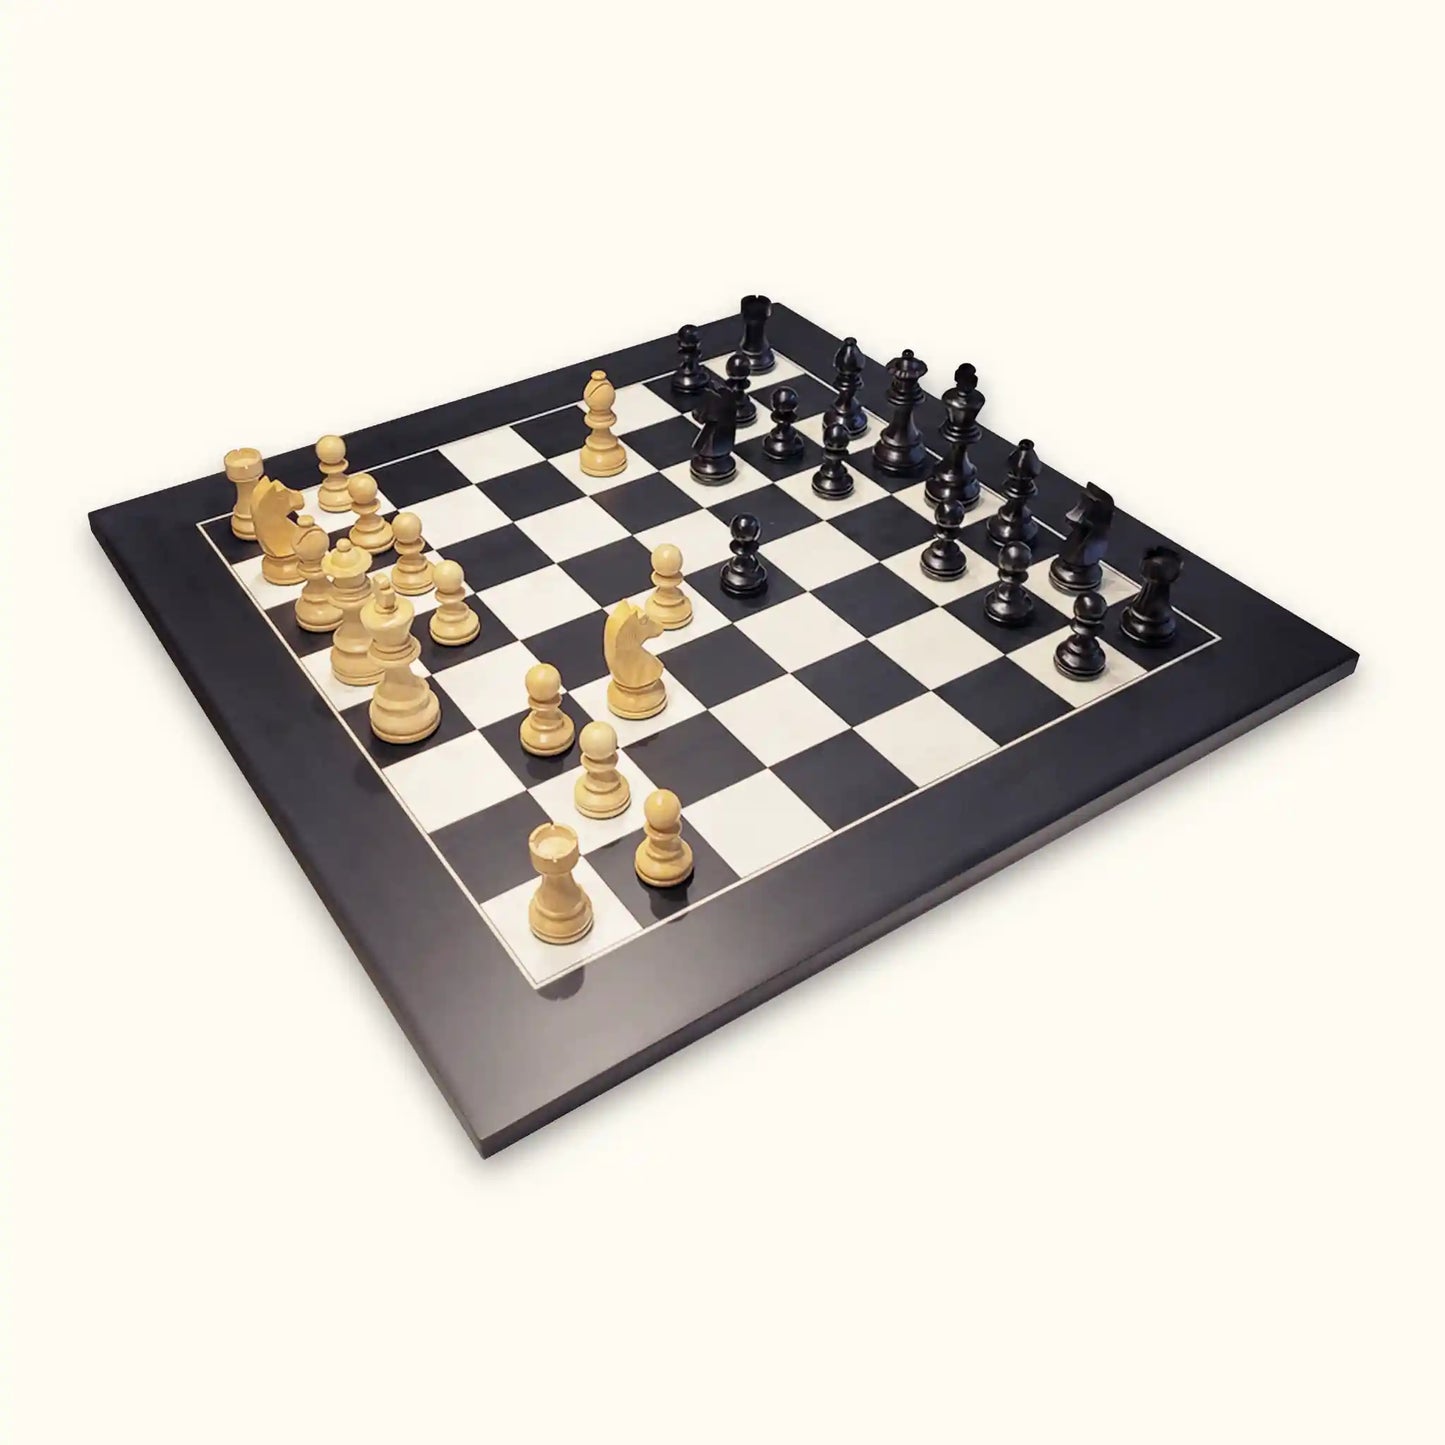 Chess pieces german knight black on black chessboard diagonal